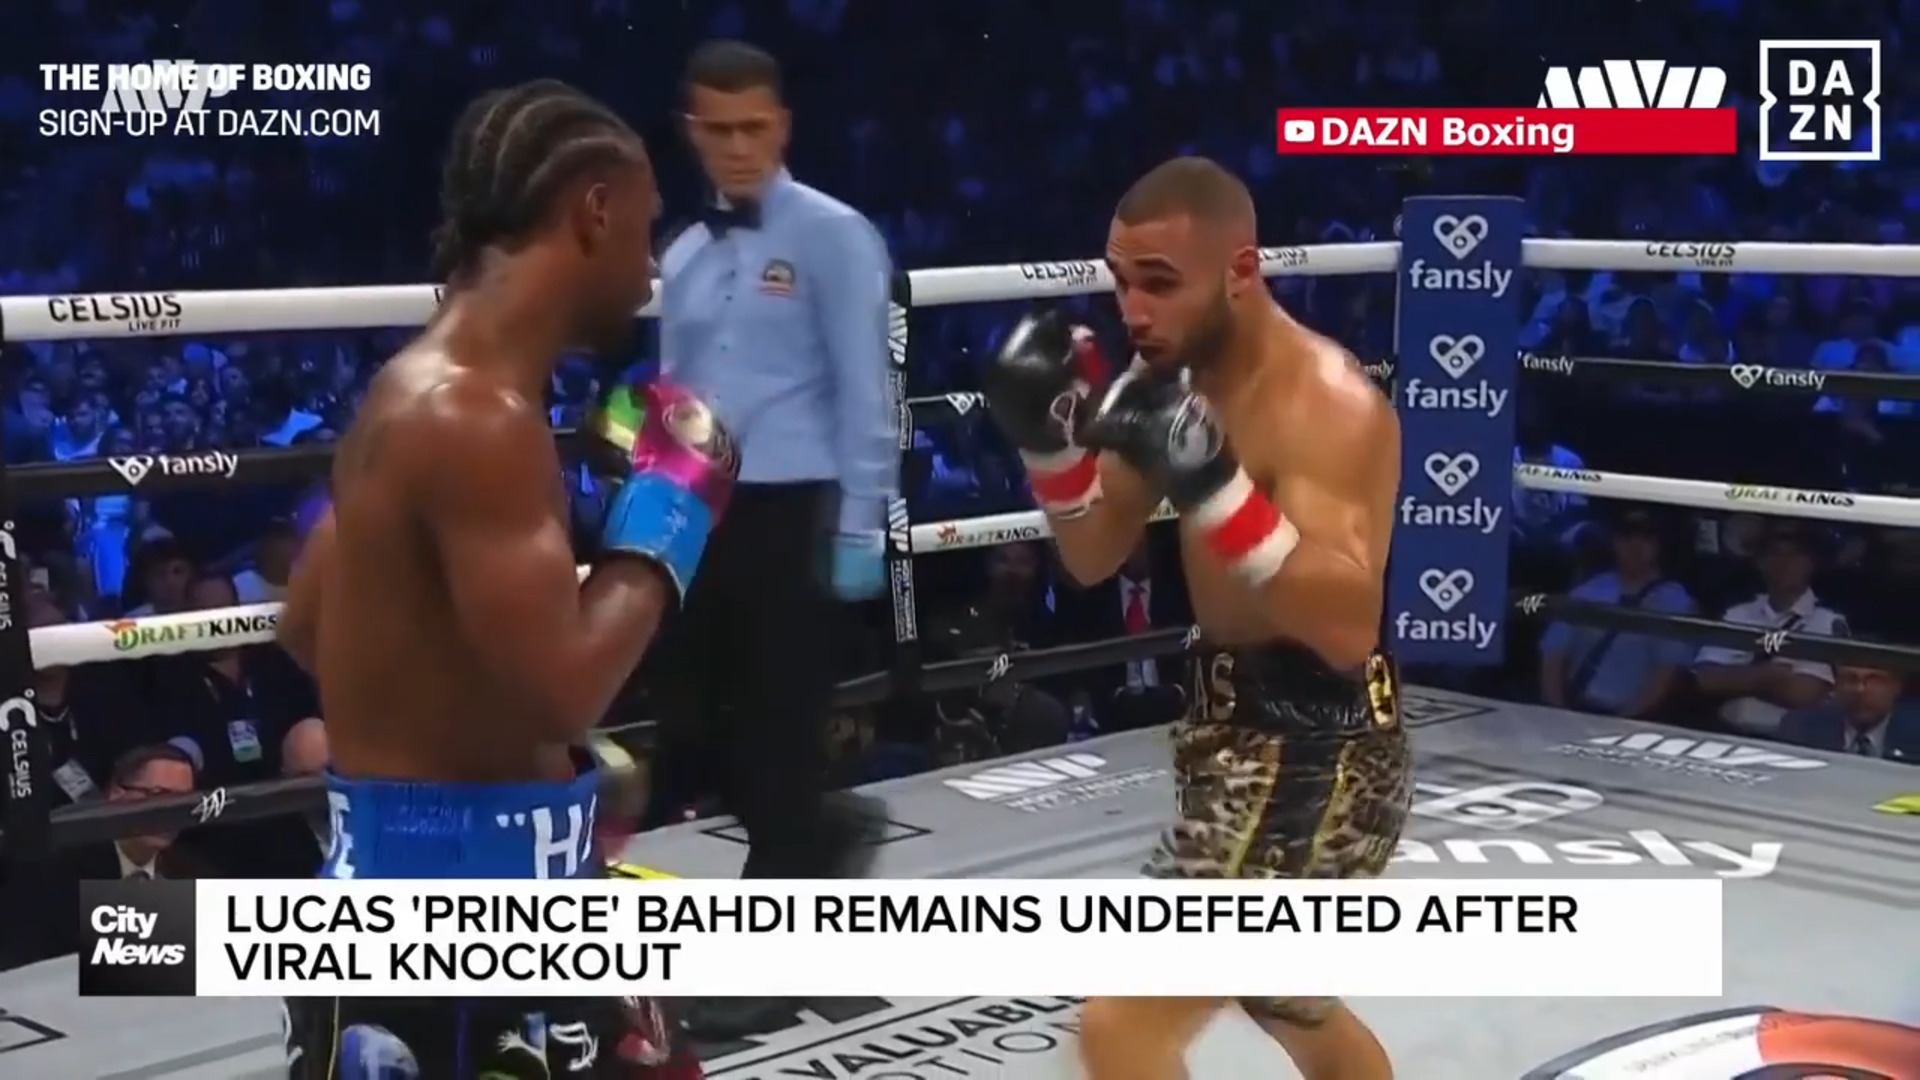 Niagara Falls boxer remains undefeated after viral KO